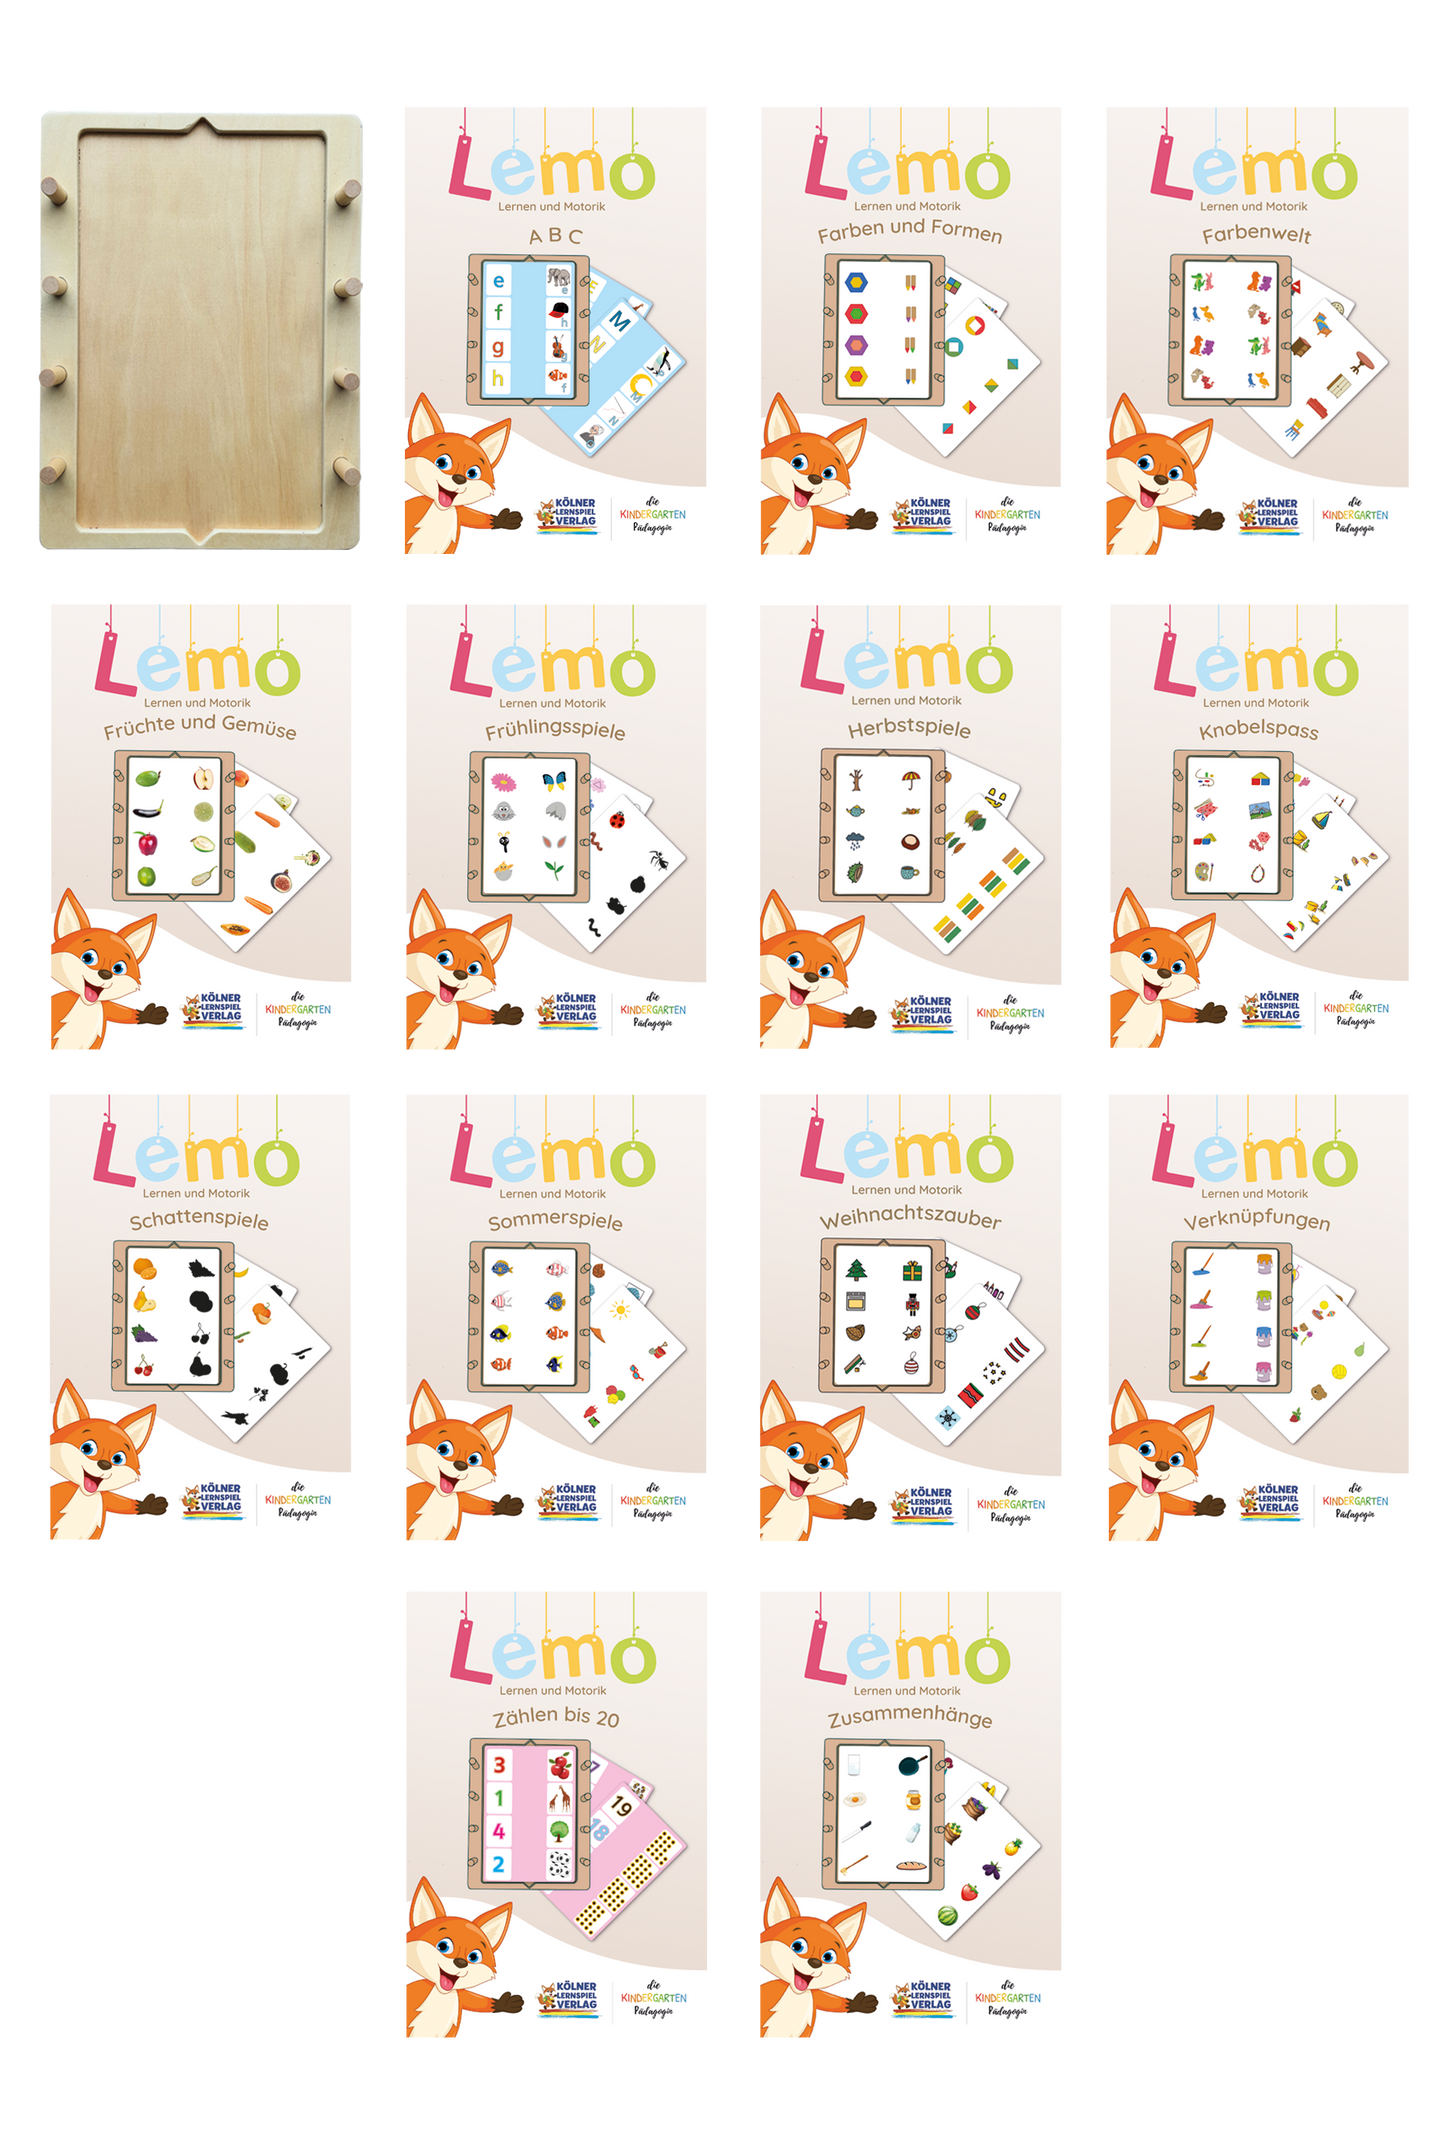 Large Lemo starter set with wooden frame and 11 decks of cards